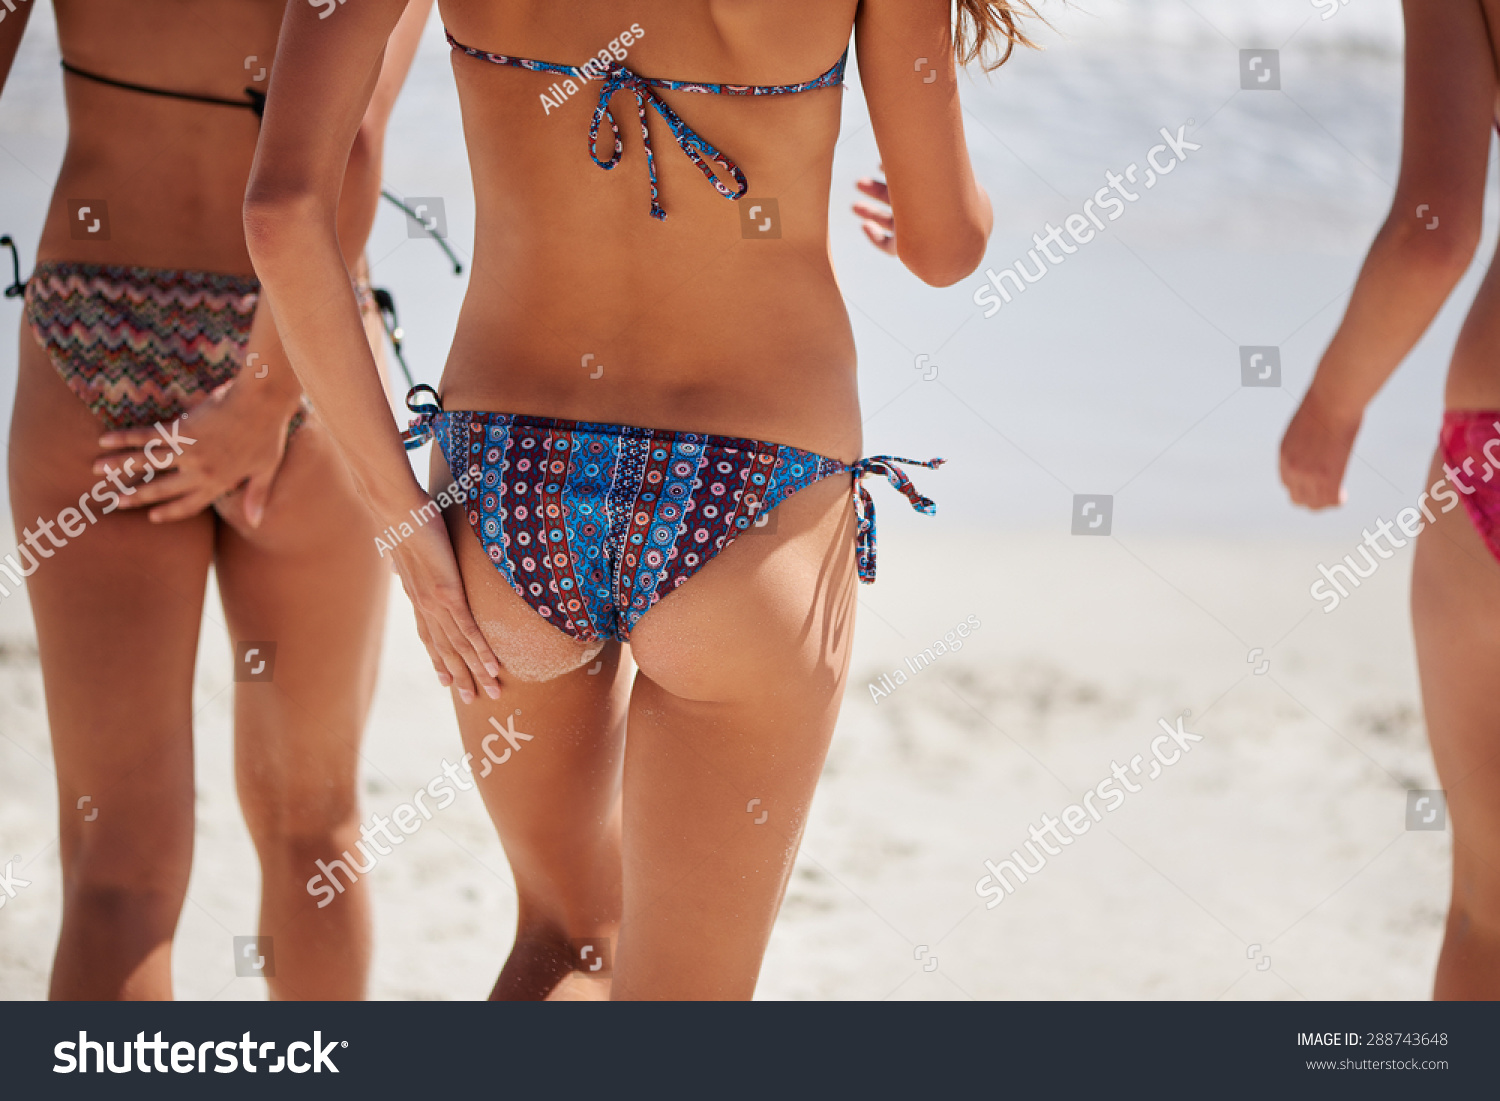 cory villanueva share beach bums images photos